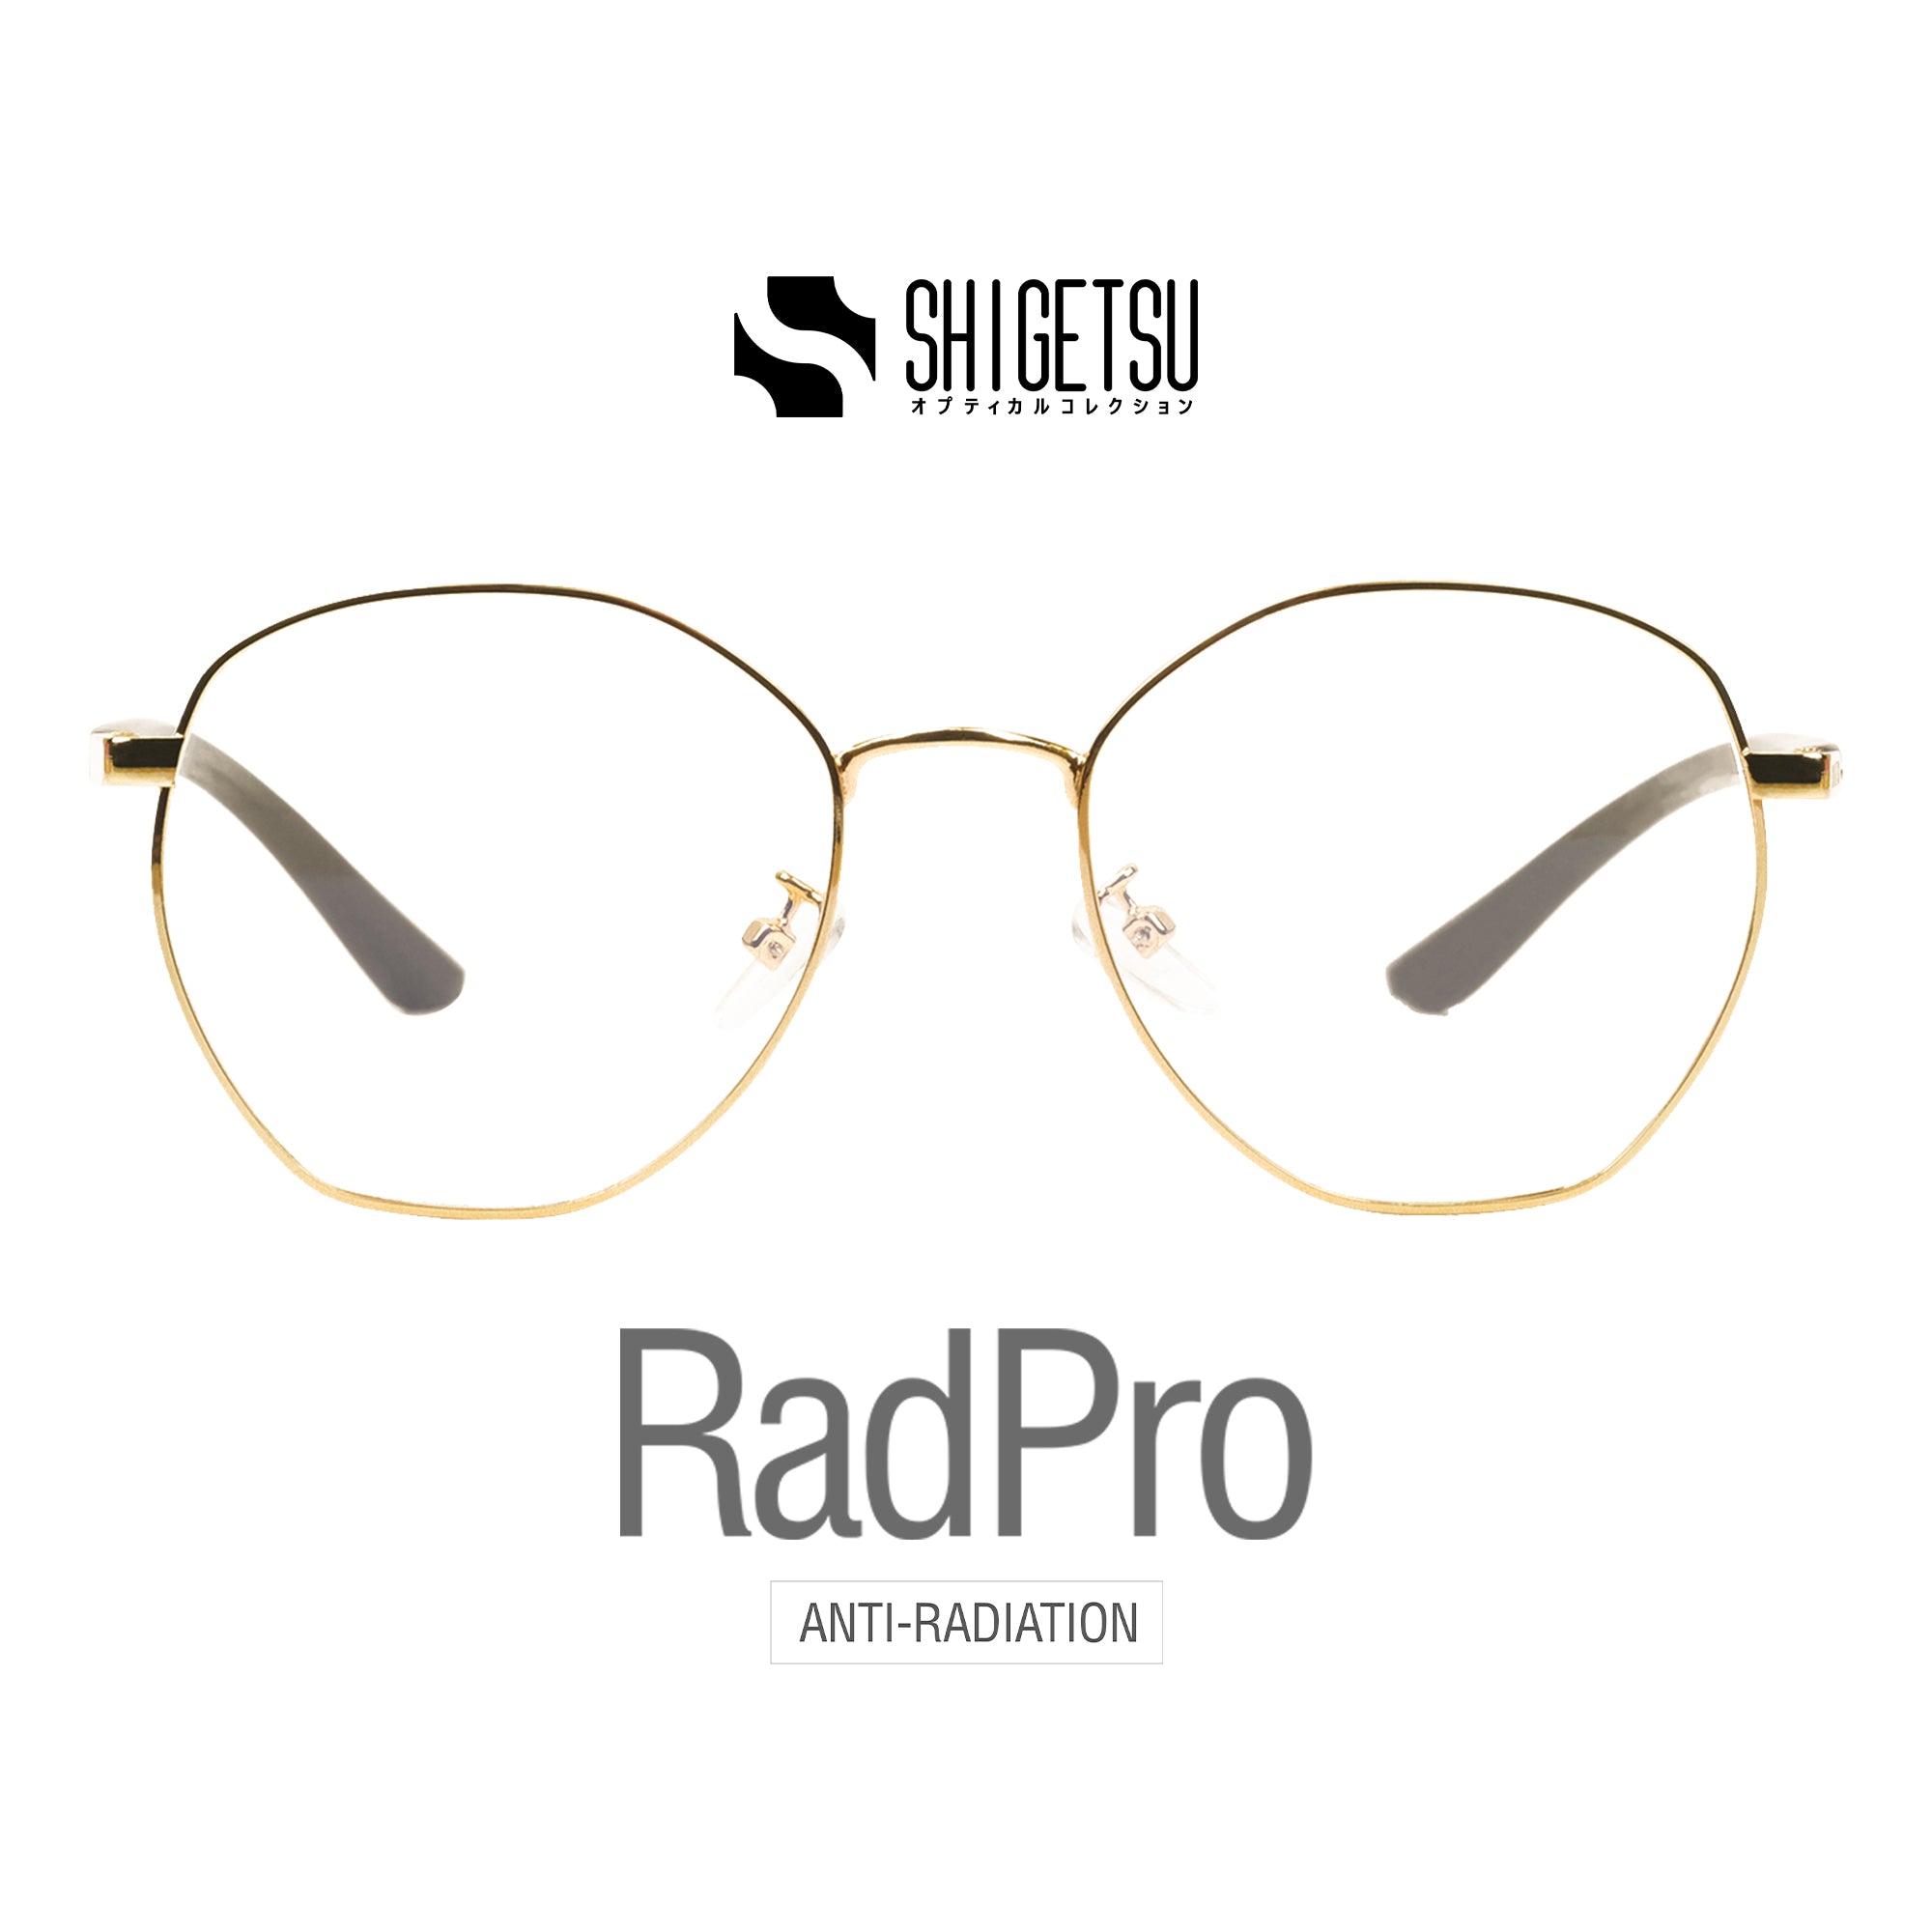 TOKONAME Radpro Eyeglasses